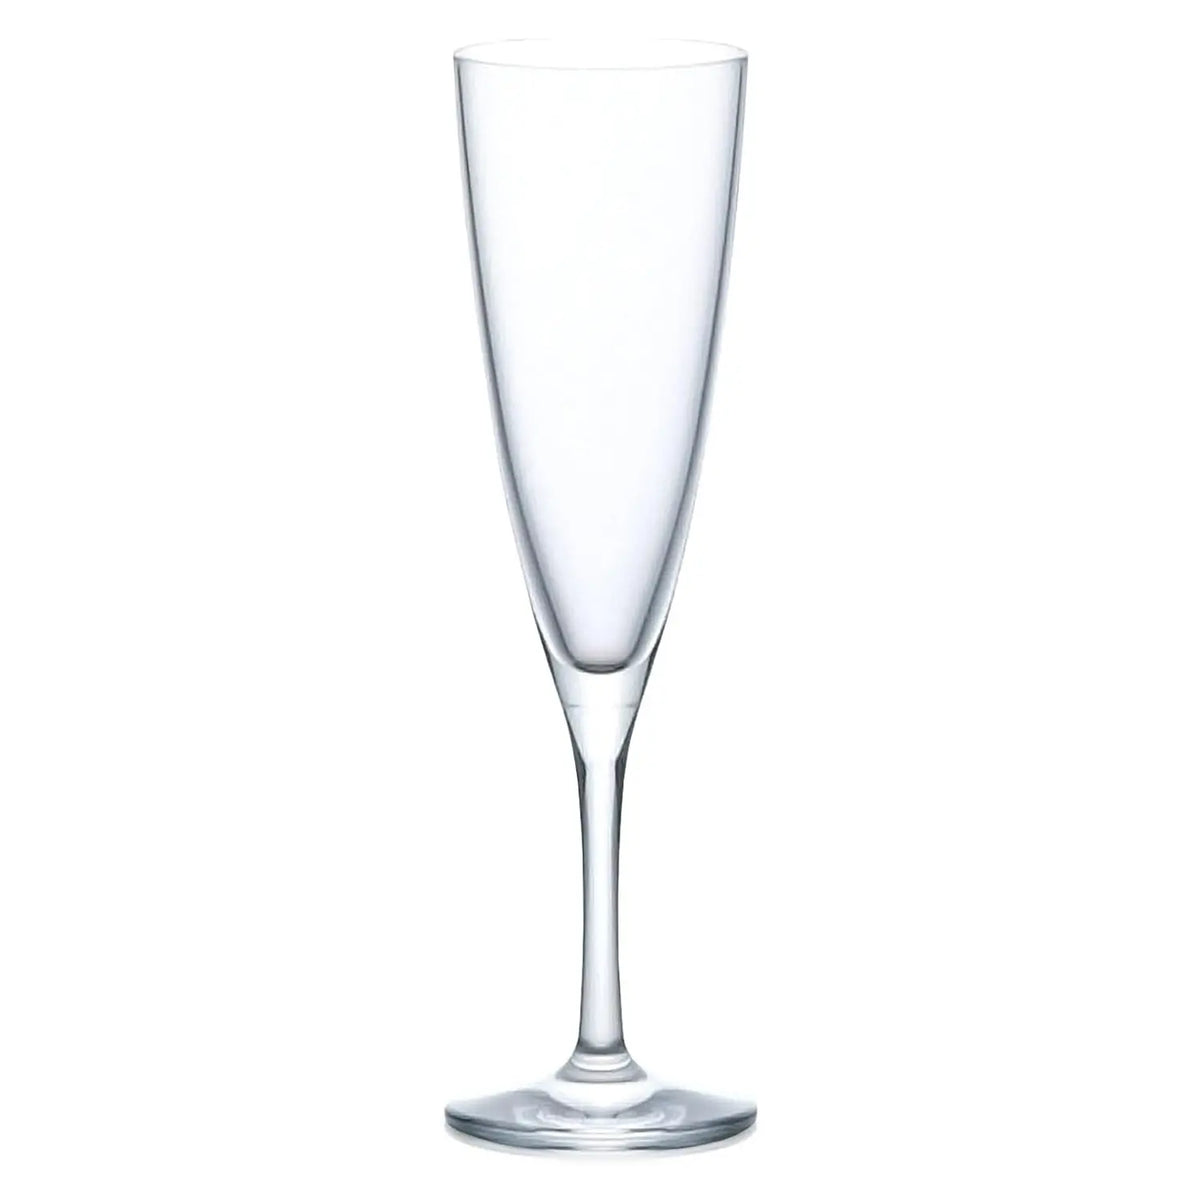 ADERIA Soda-Lime Glass Flute Beer Glass 170ml Set of 3